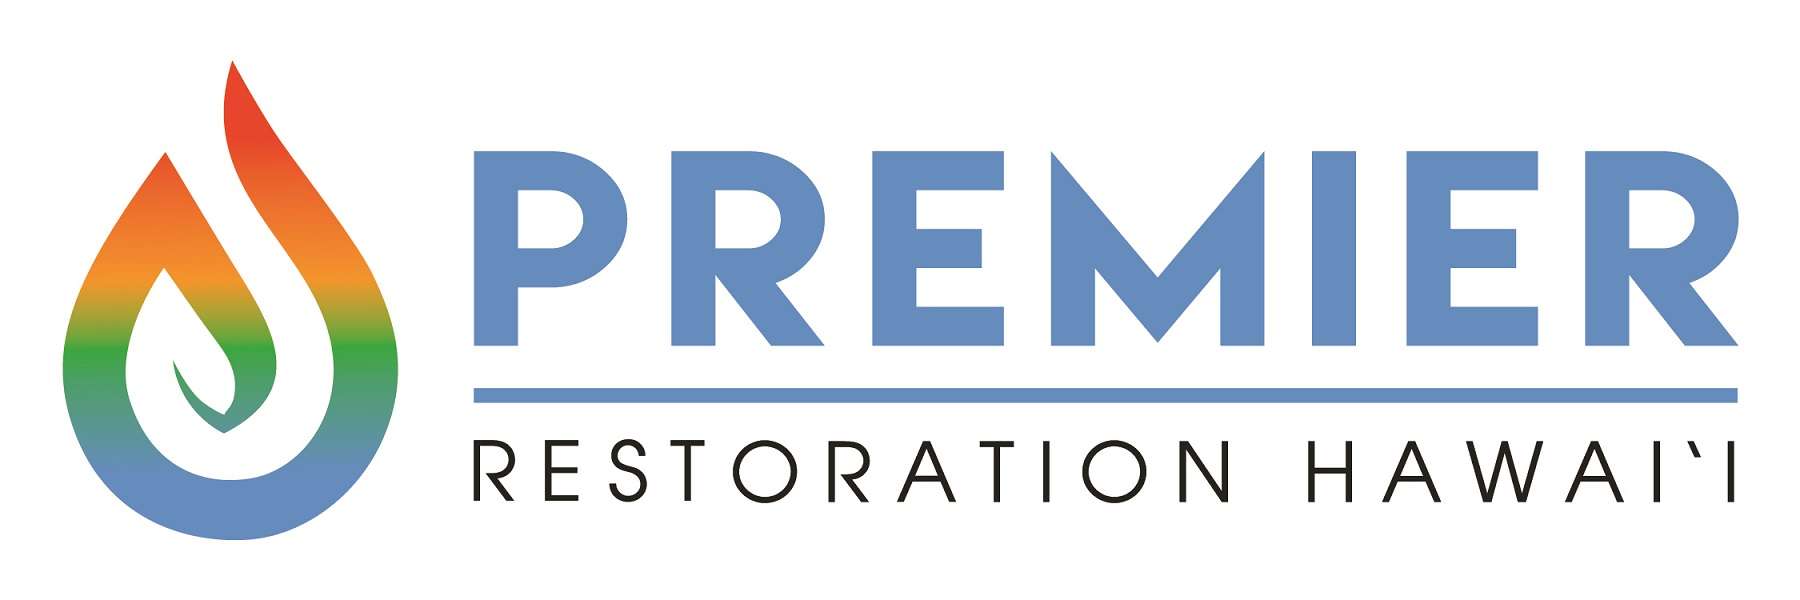 Premier Restoration Hawaii Logo